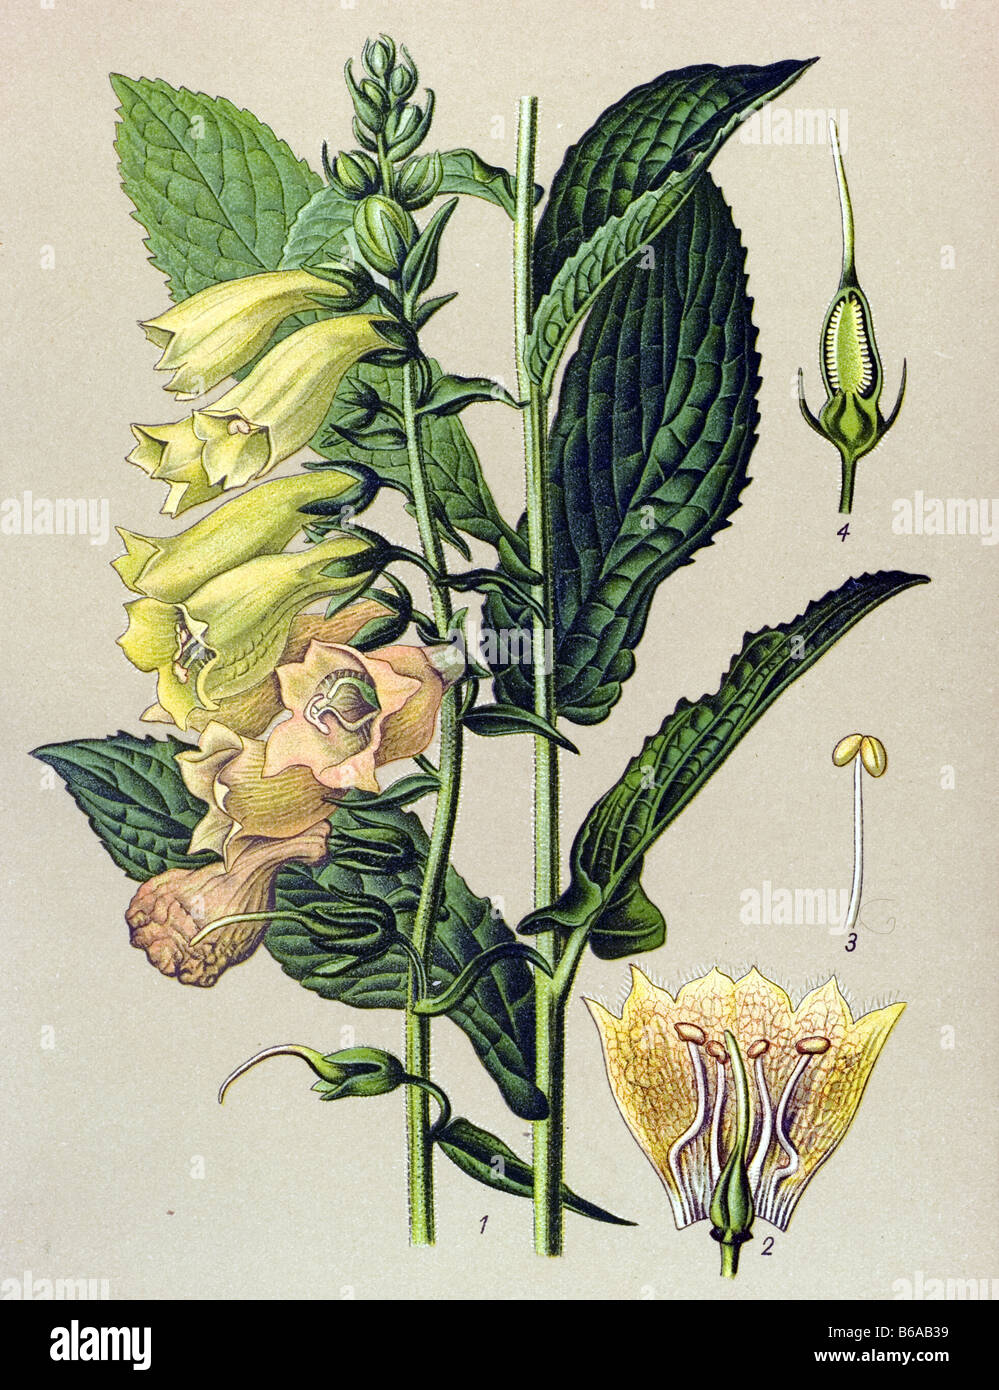 Digitalis grandiflora poisonous plants illustrations Stock Photo